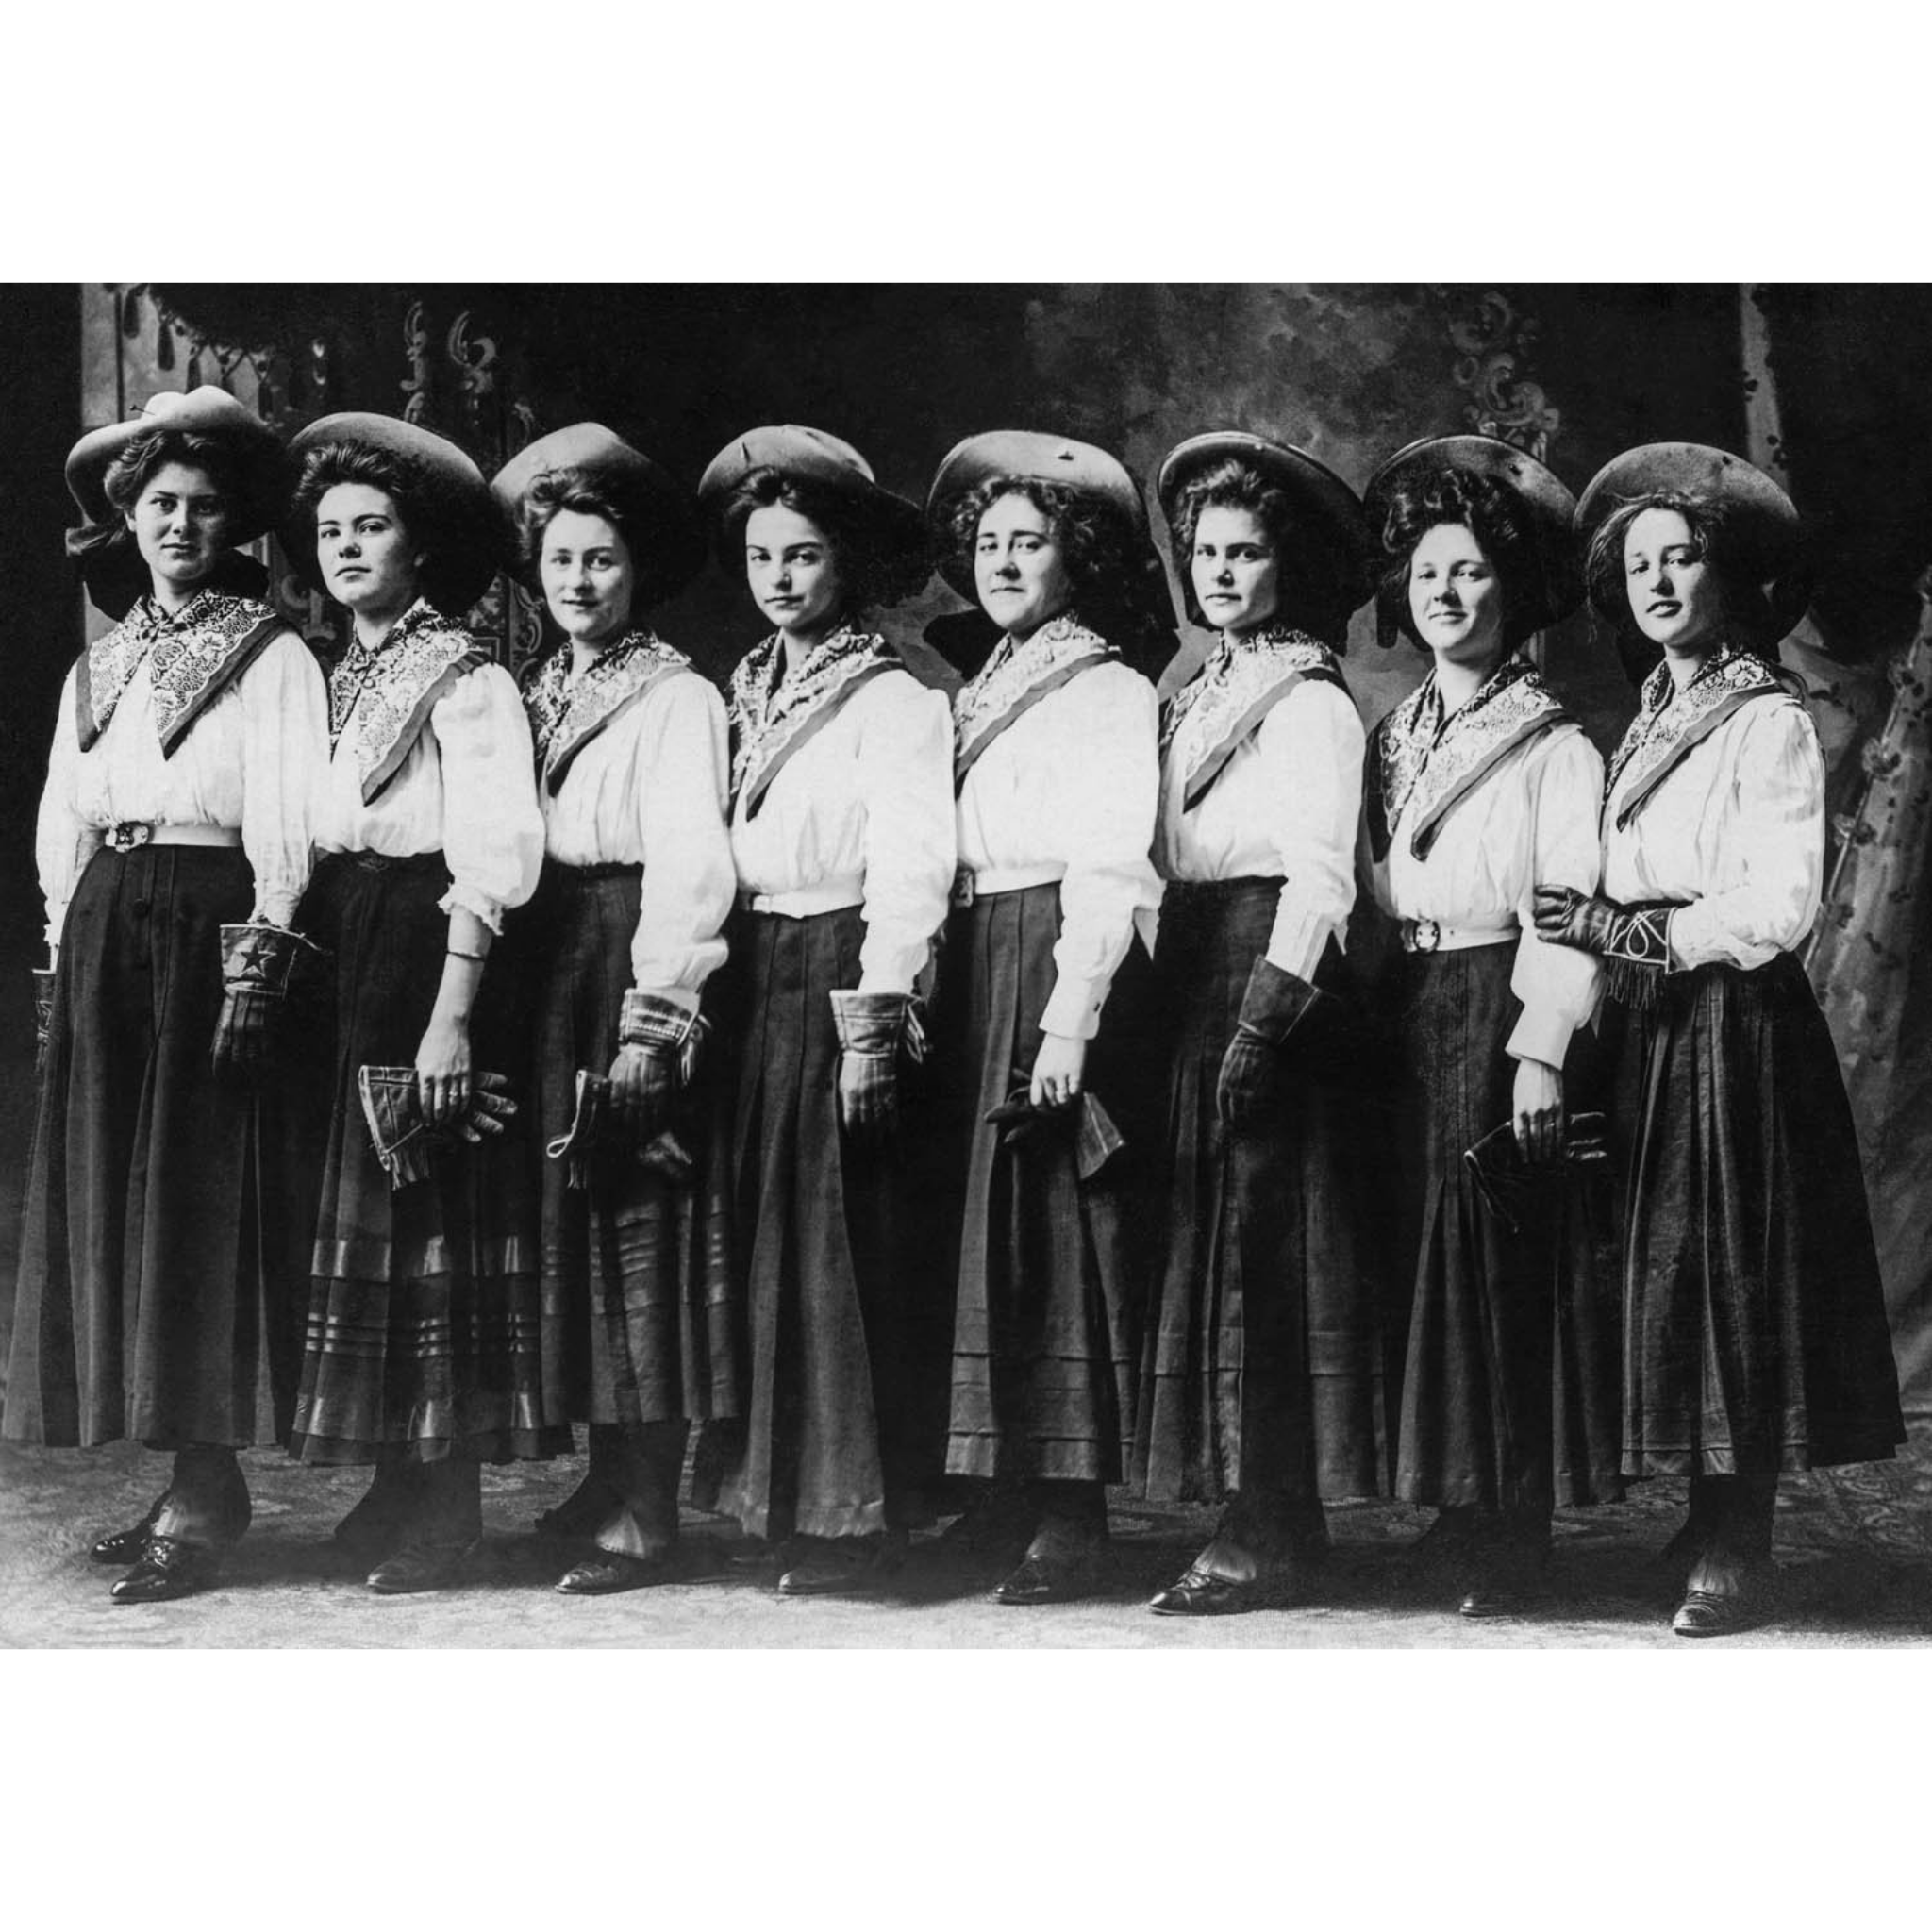 Montana Cowgirls - ca. 1915 Photograph